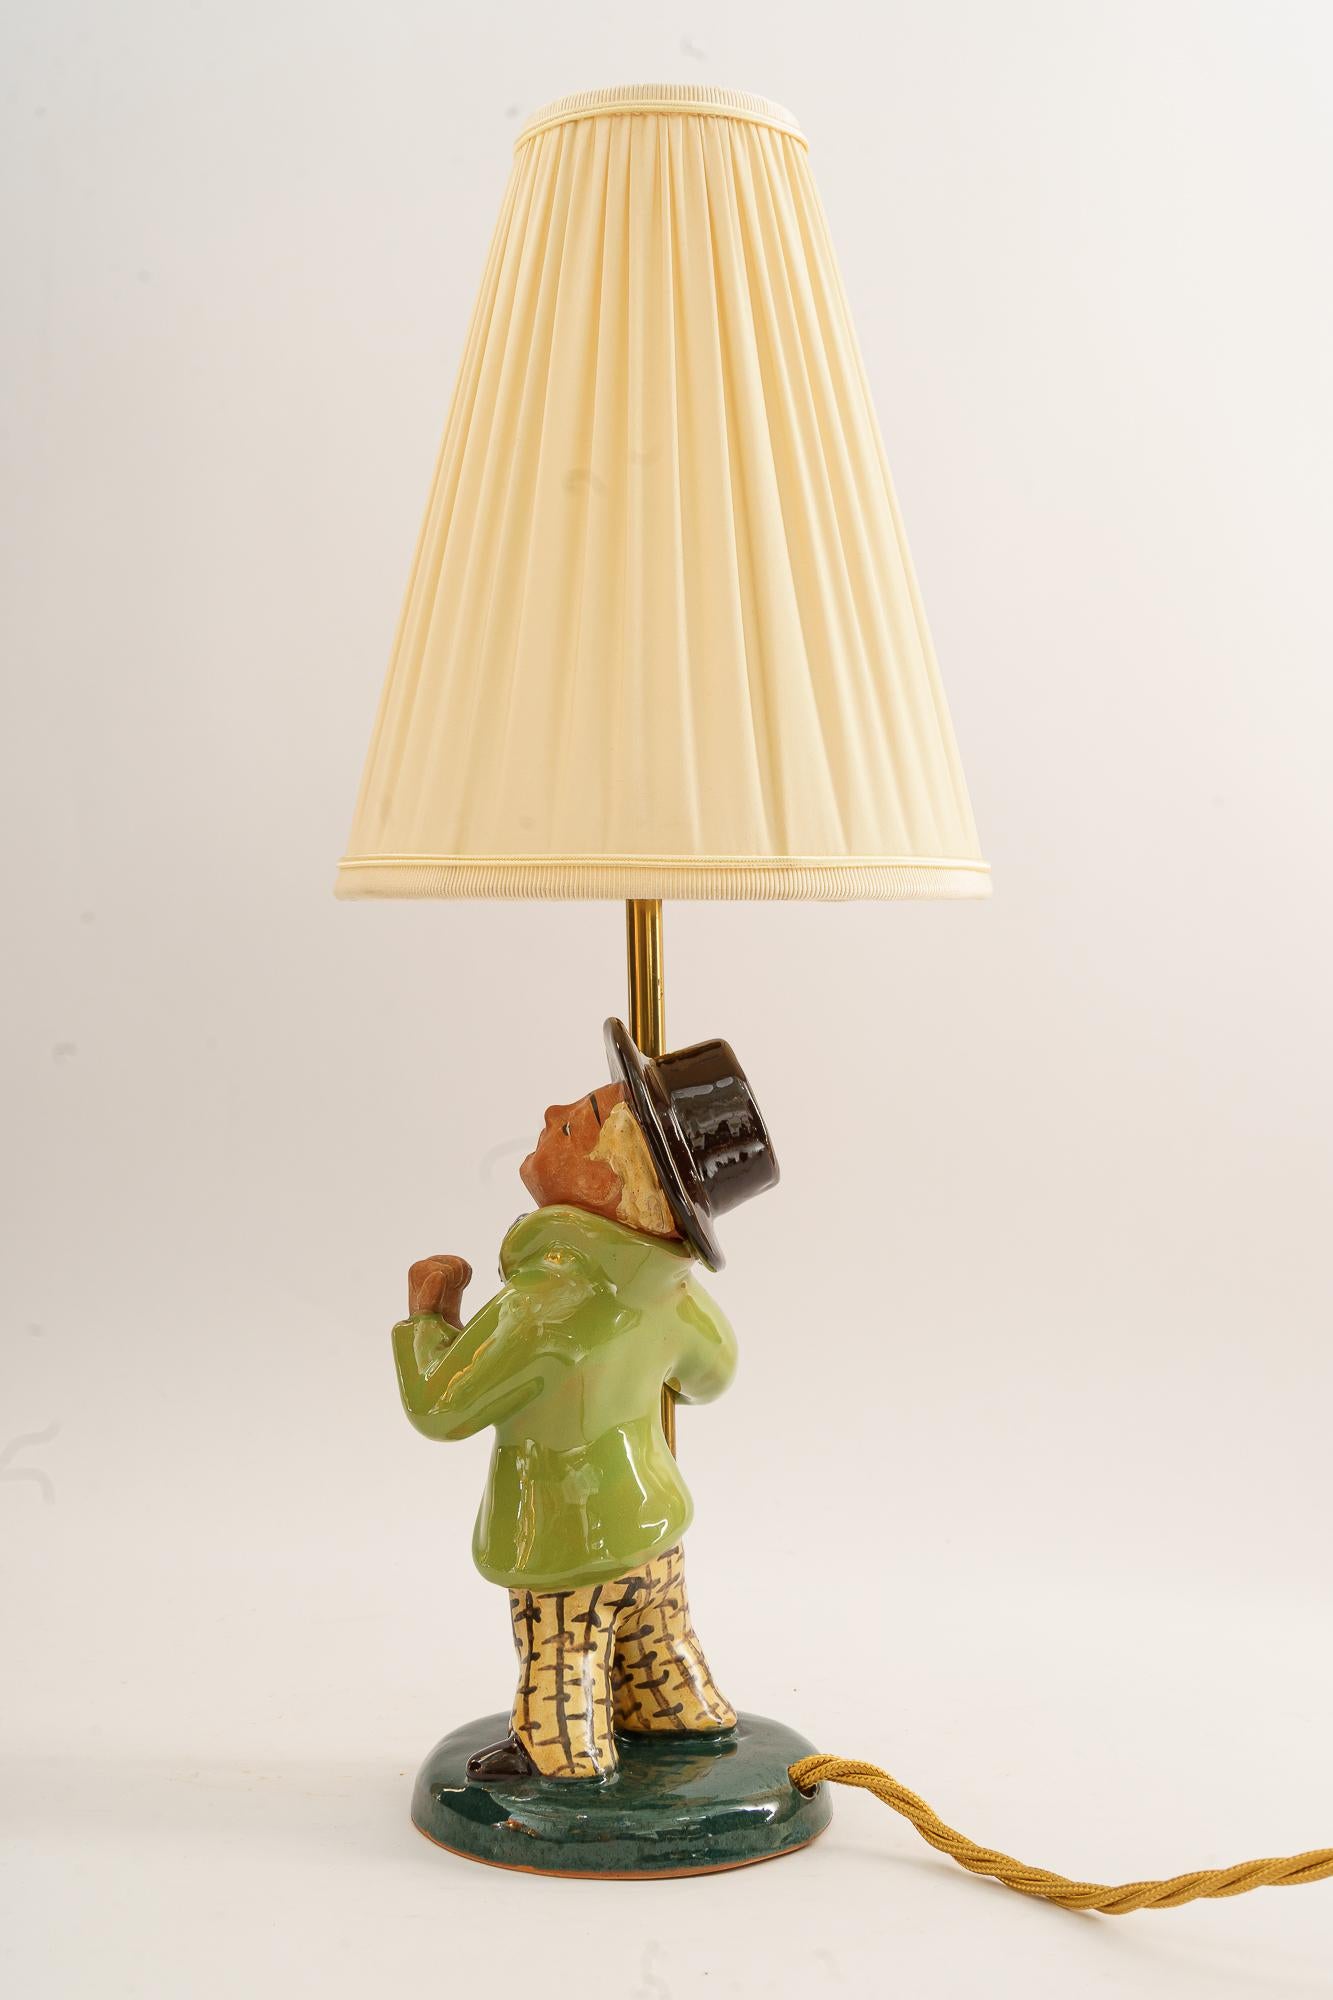 Mid-20th Century Ceramic Lamp with Fabric Shade, Vienna, Around 1950s For Sale